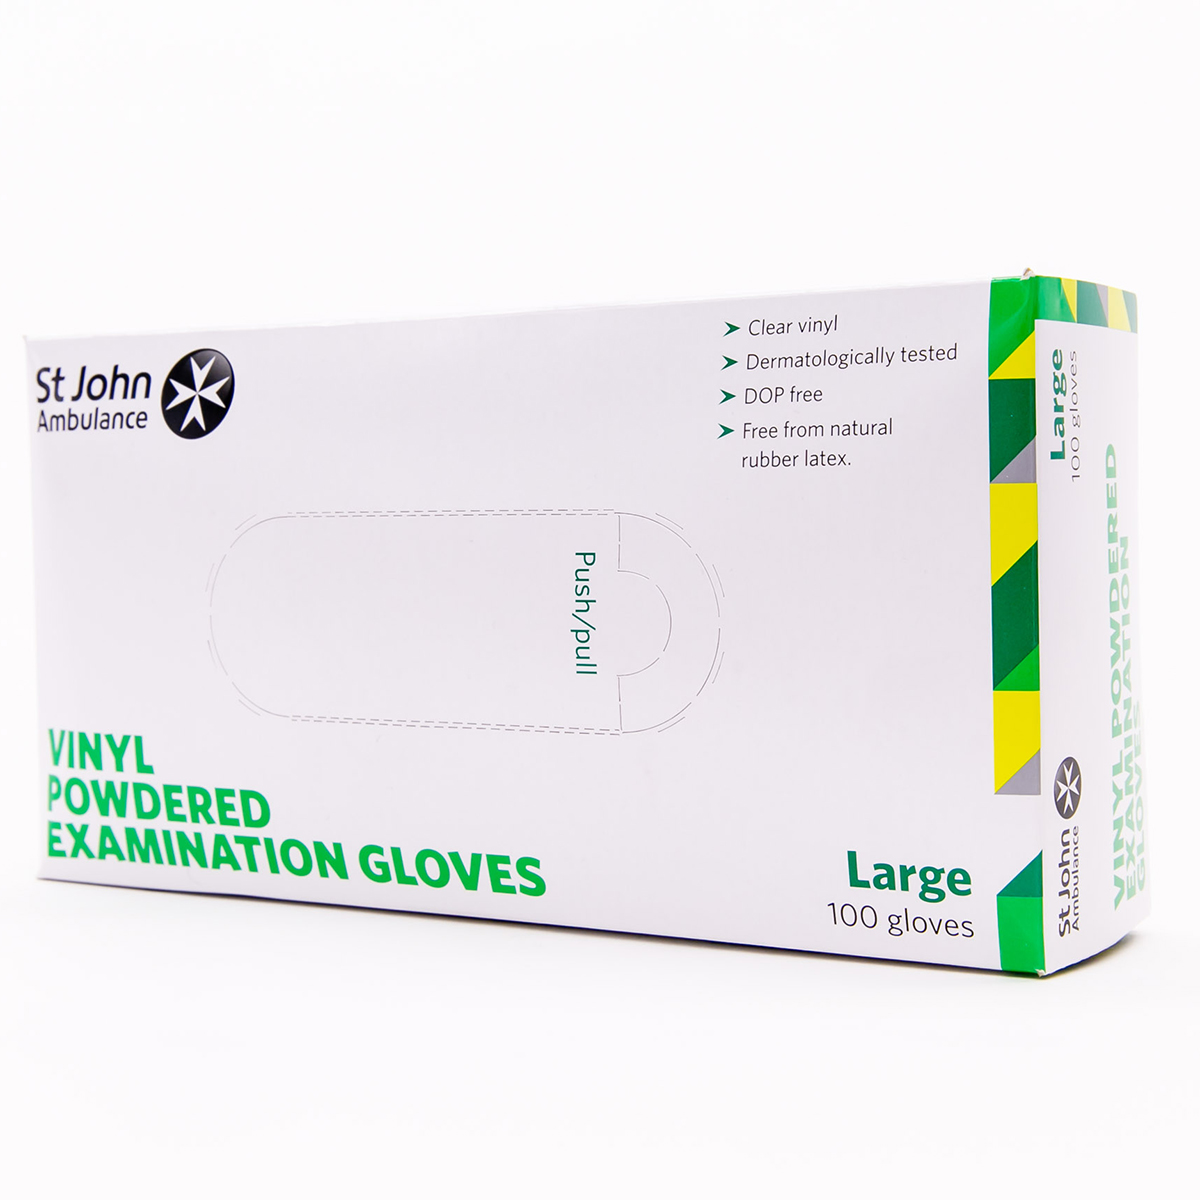 Box of 100 Large St John Ambulance Vinyl Pre-Powdered Gloves